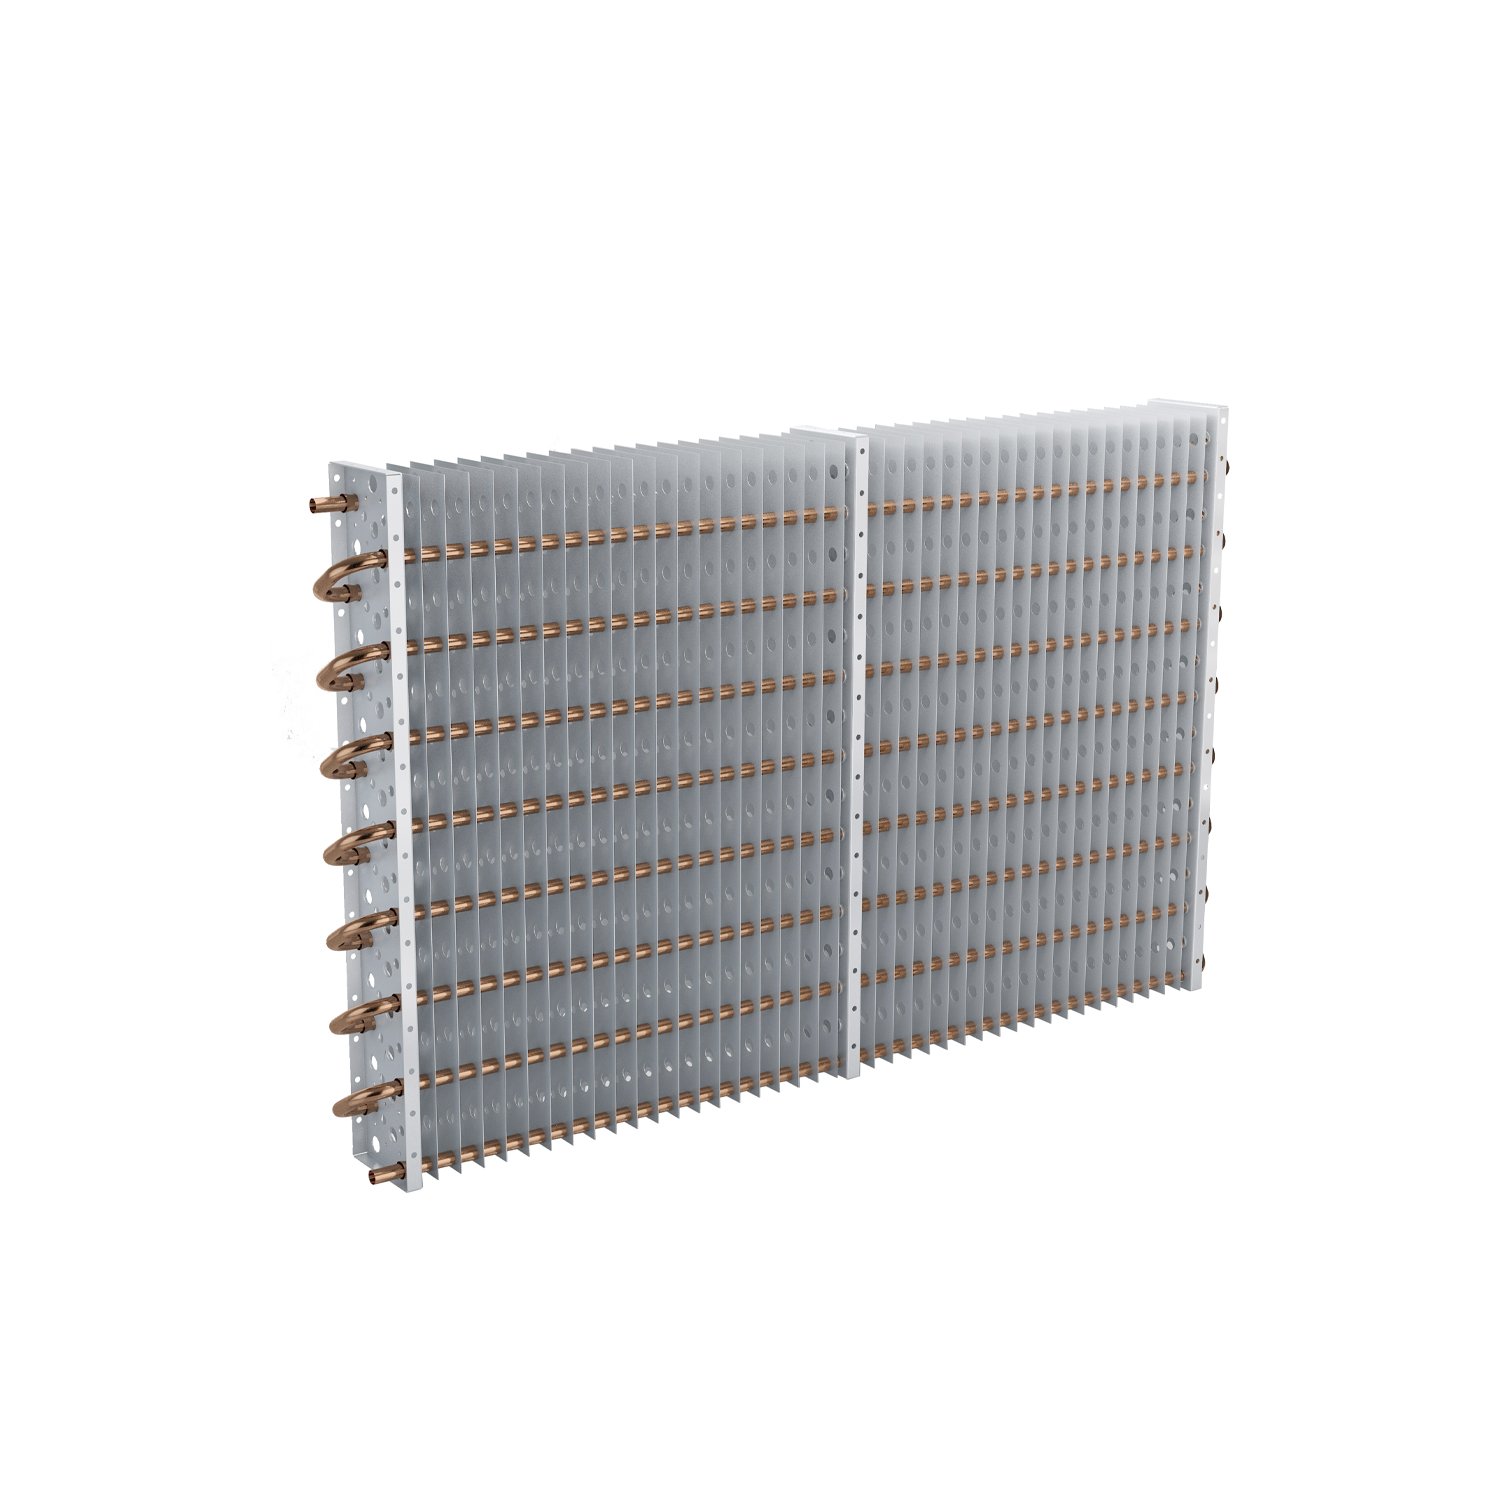 Bandeja de goteo para el evaporador REC09060, 640 x 685 x 250 x 1000